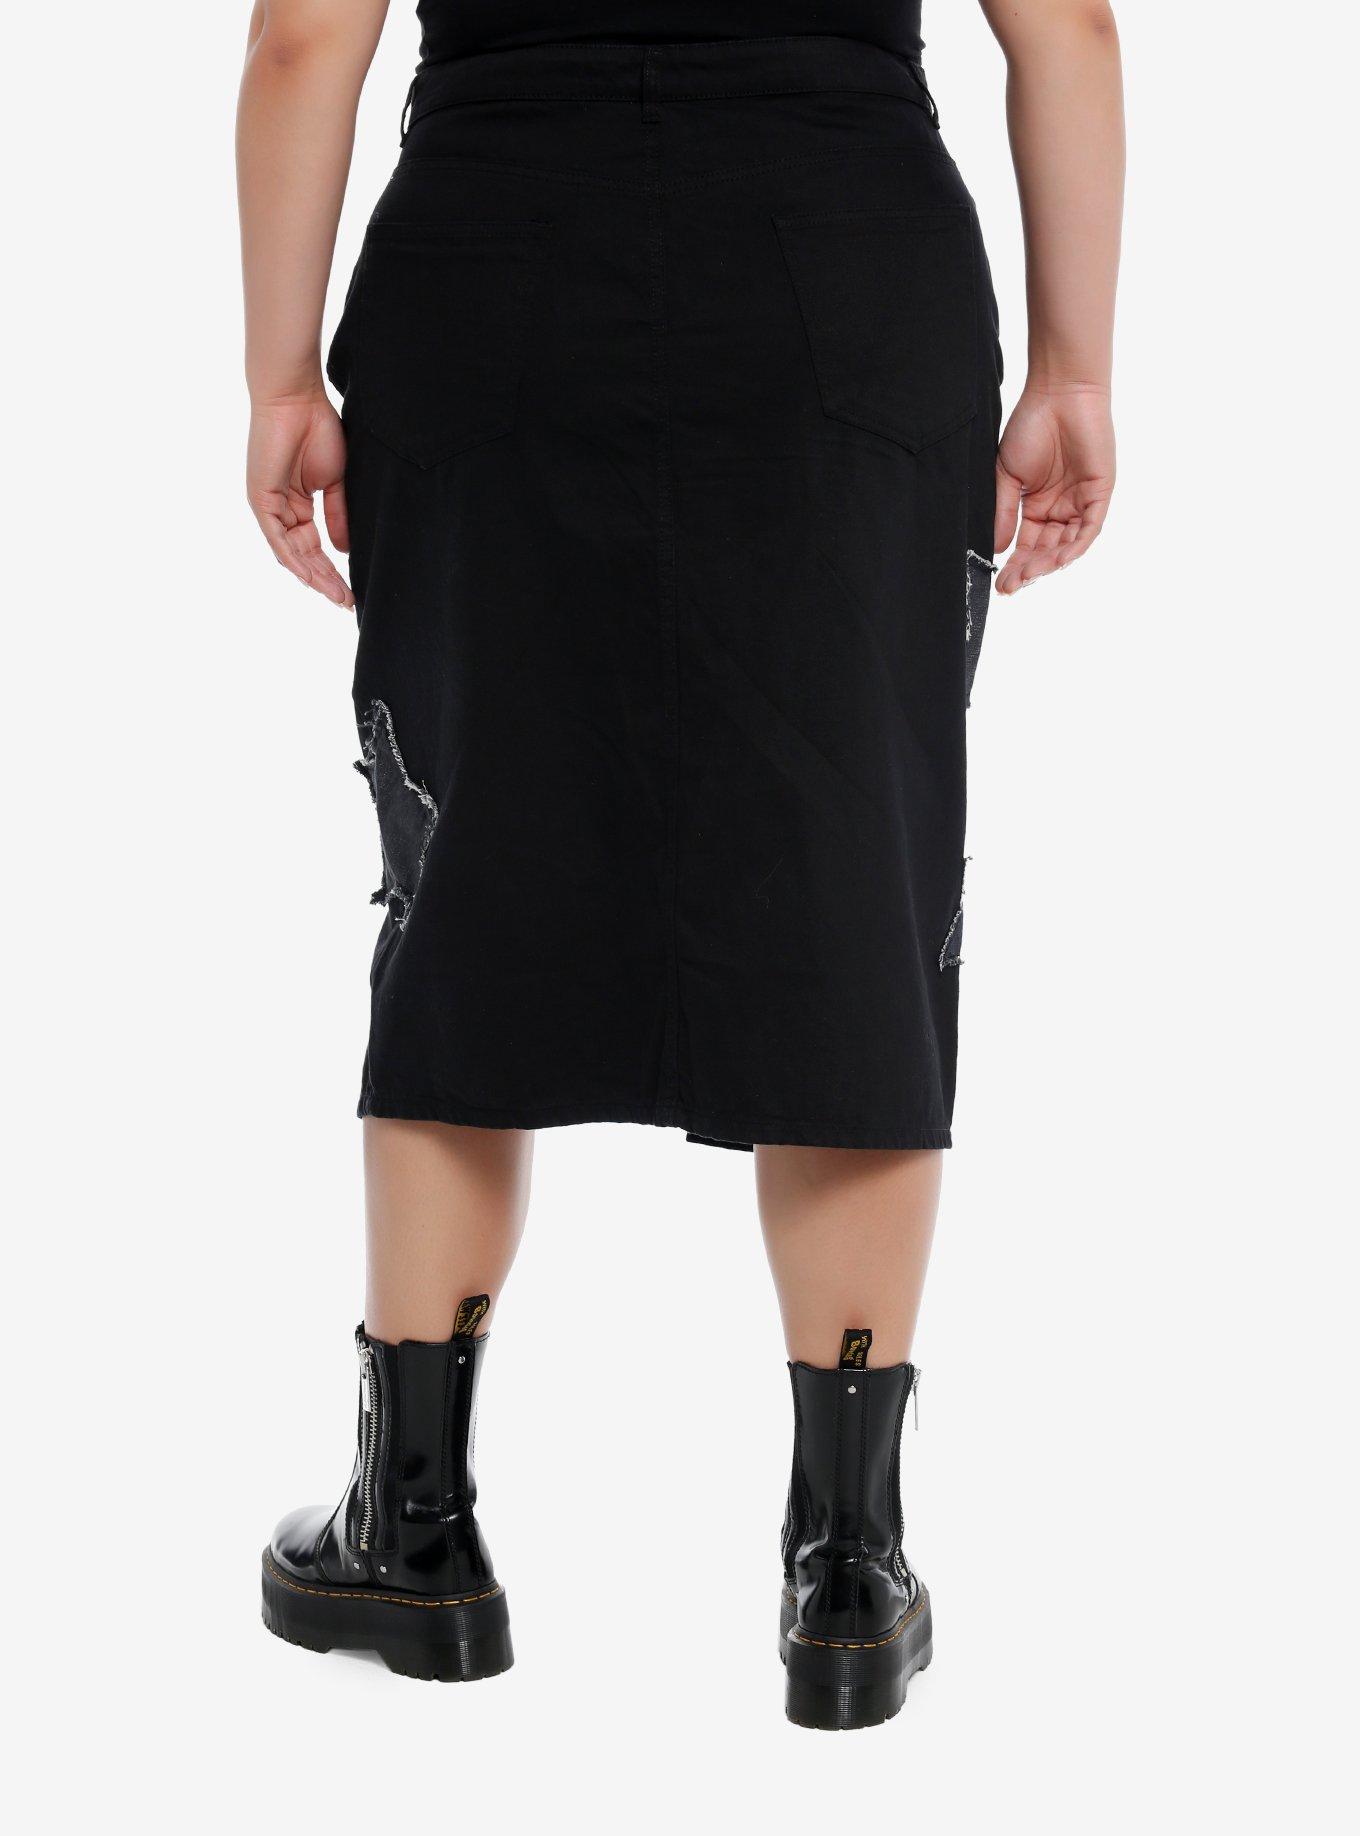 Daisy Street Star Patch Black Denim Midi Skirt Plus